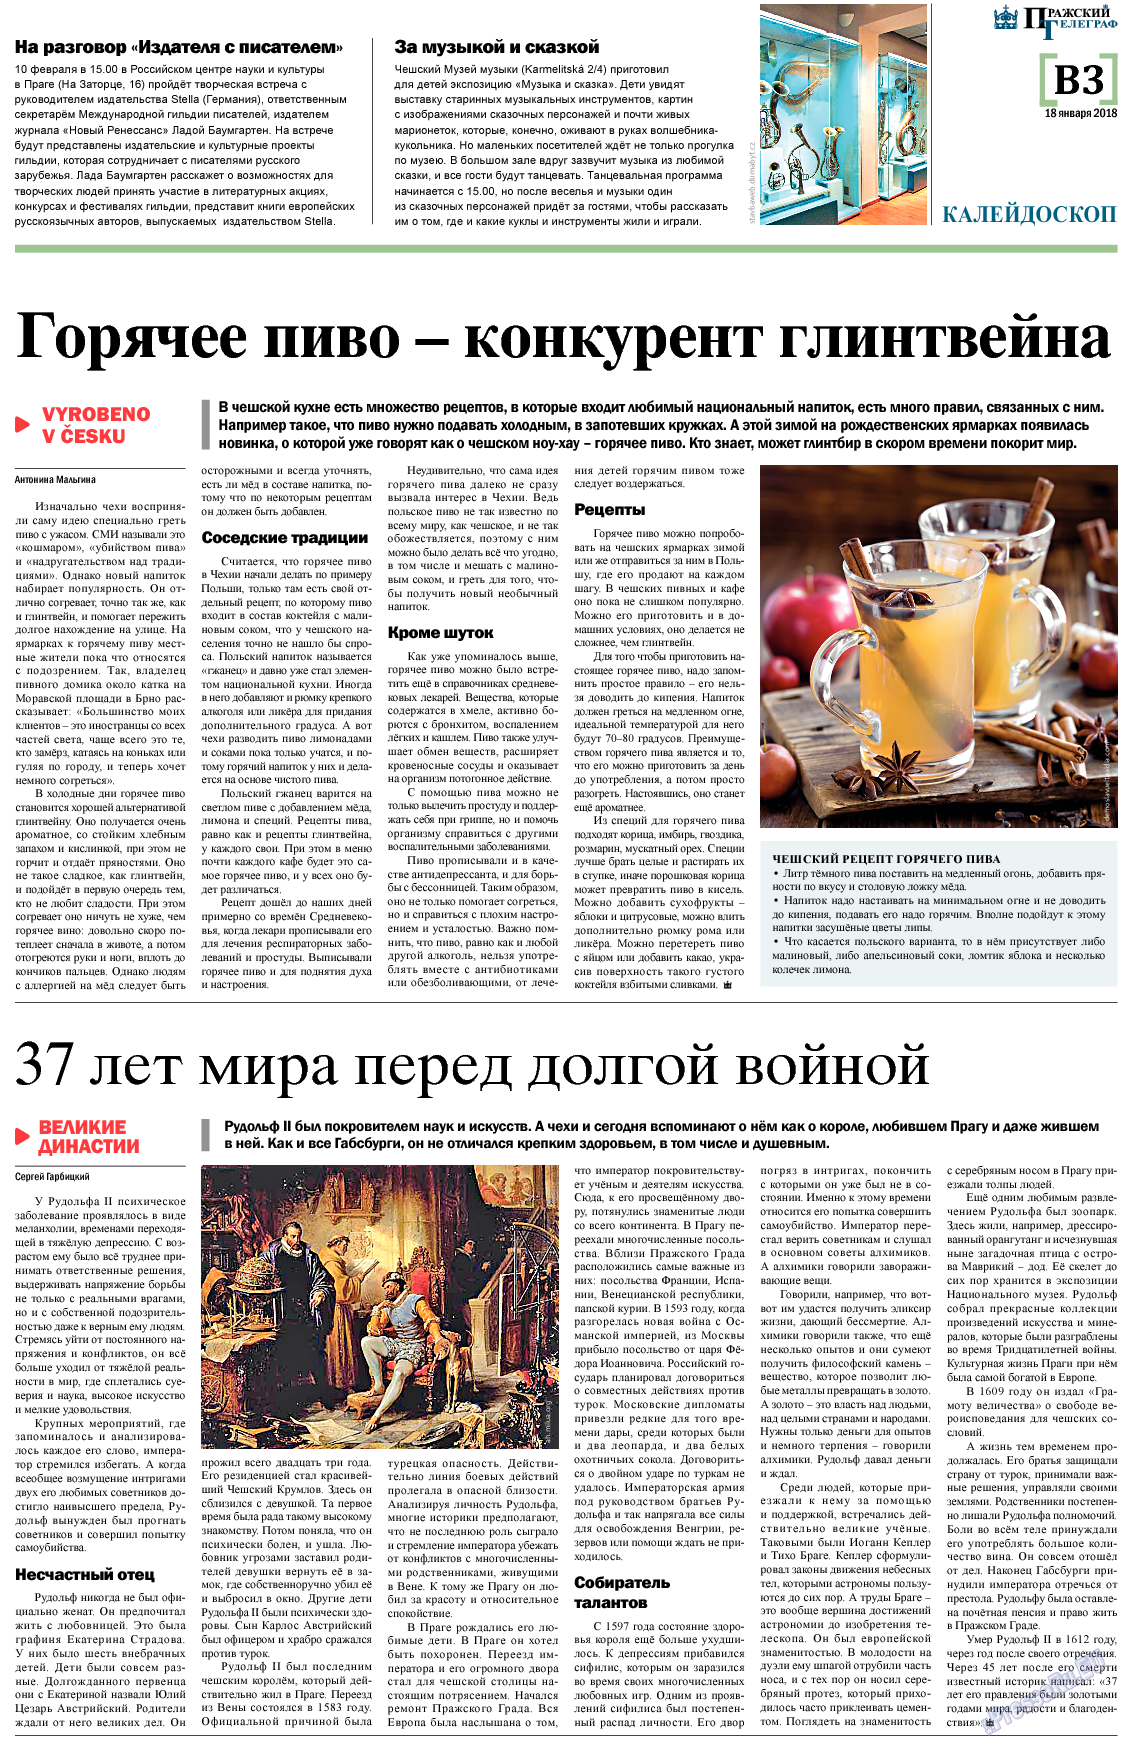 Пражский телеграф, газета. 2018 №3 стр.11